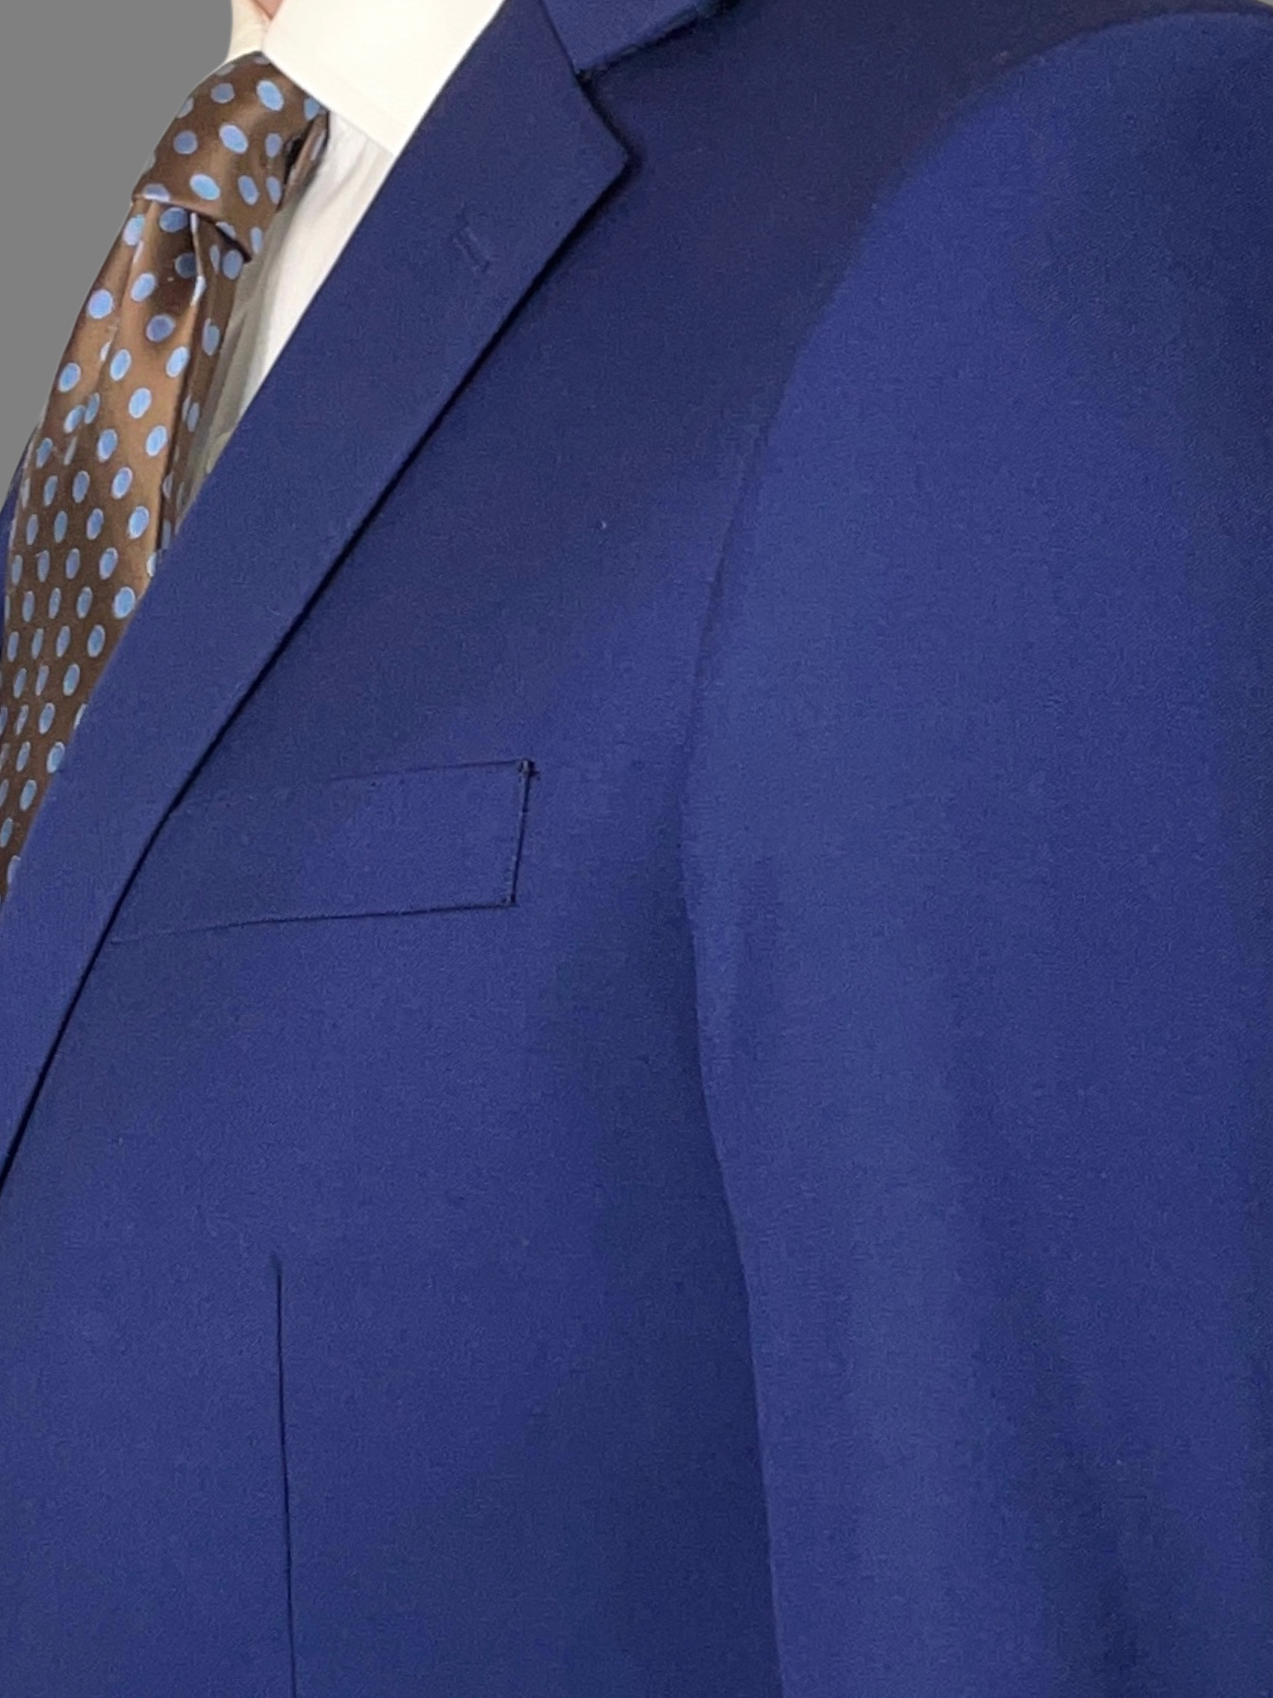 SUITCAFE Lapis Blue Men's Suit in CashLana™ Wool